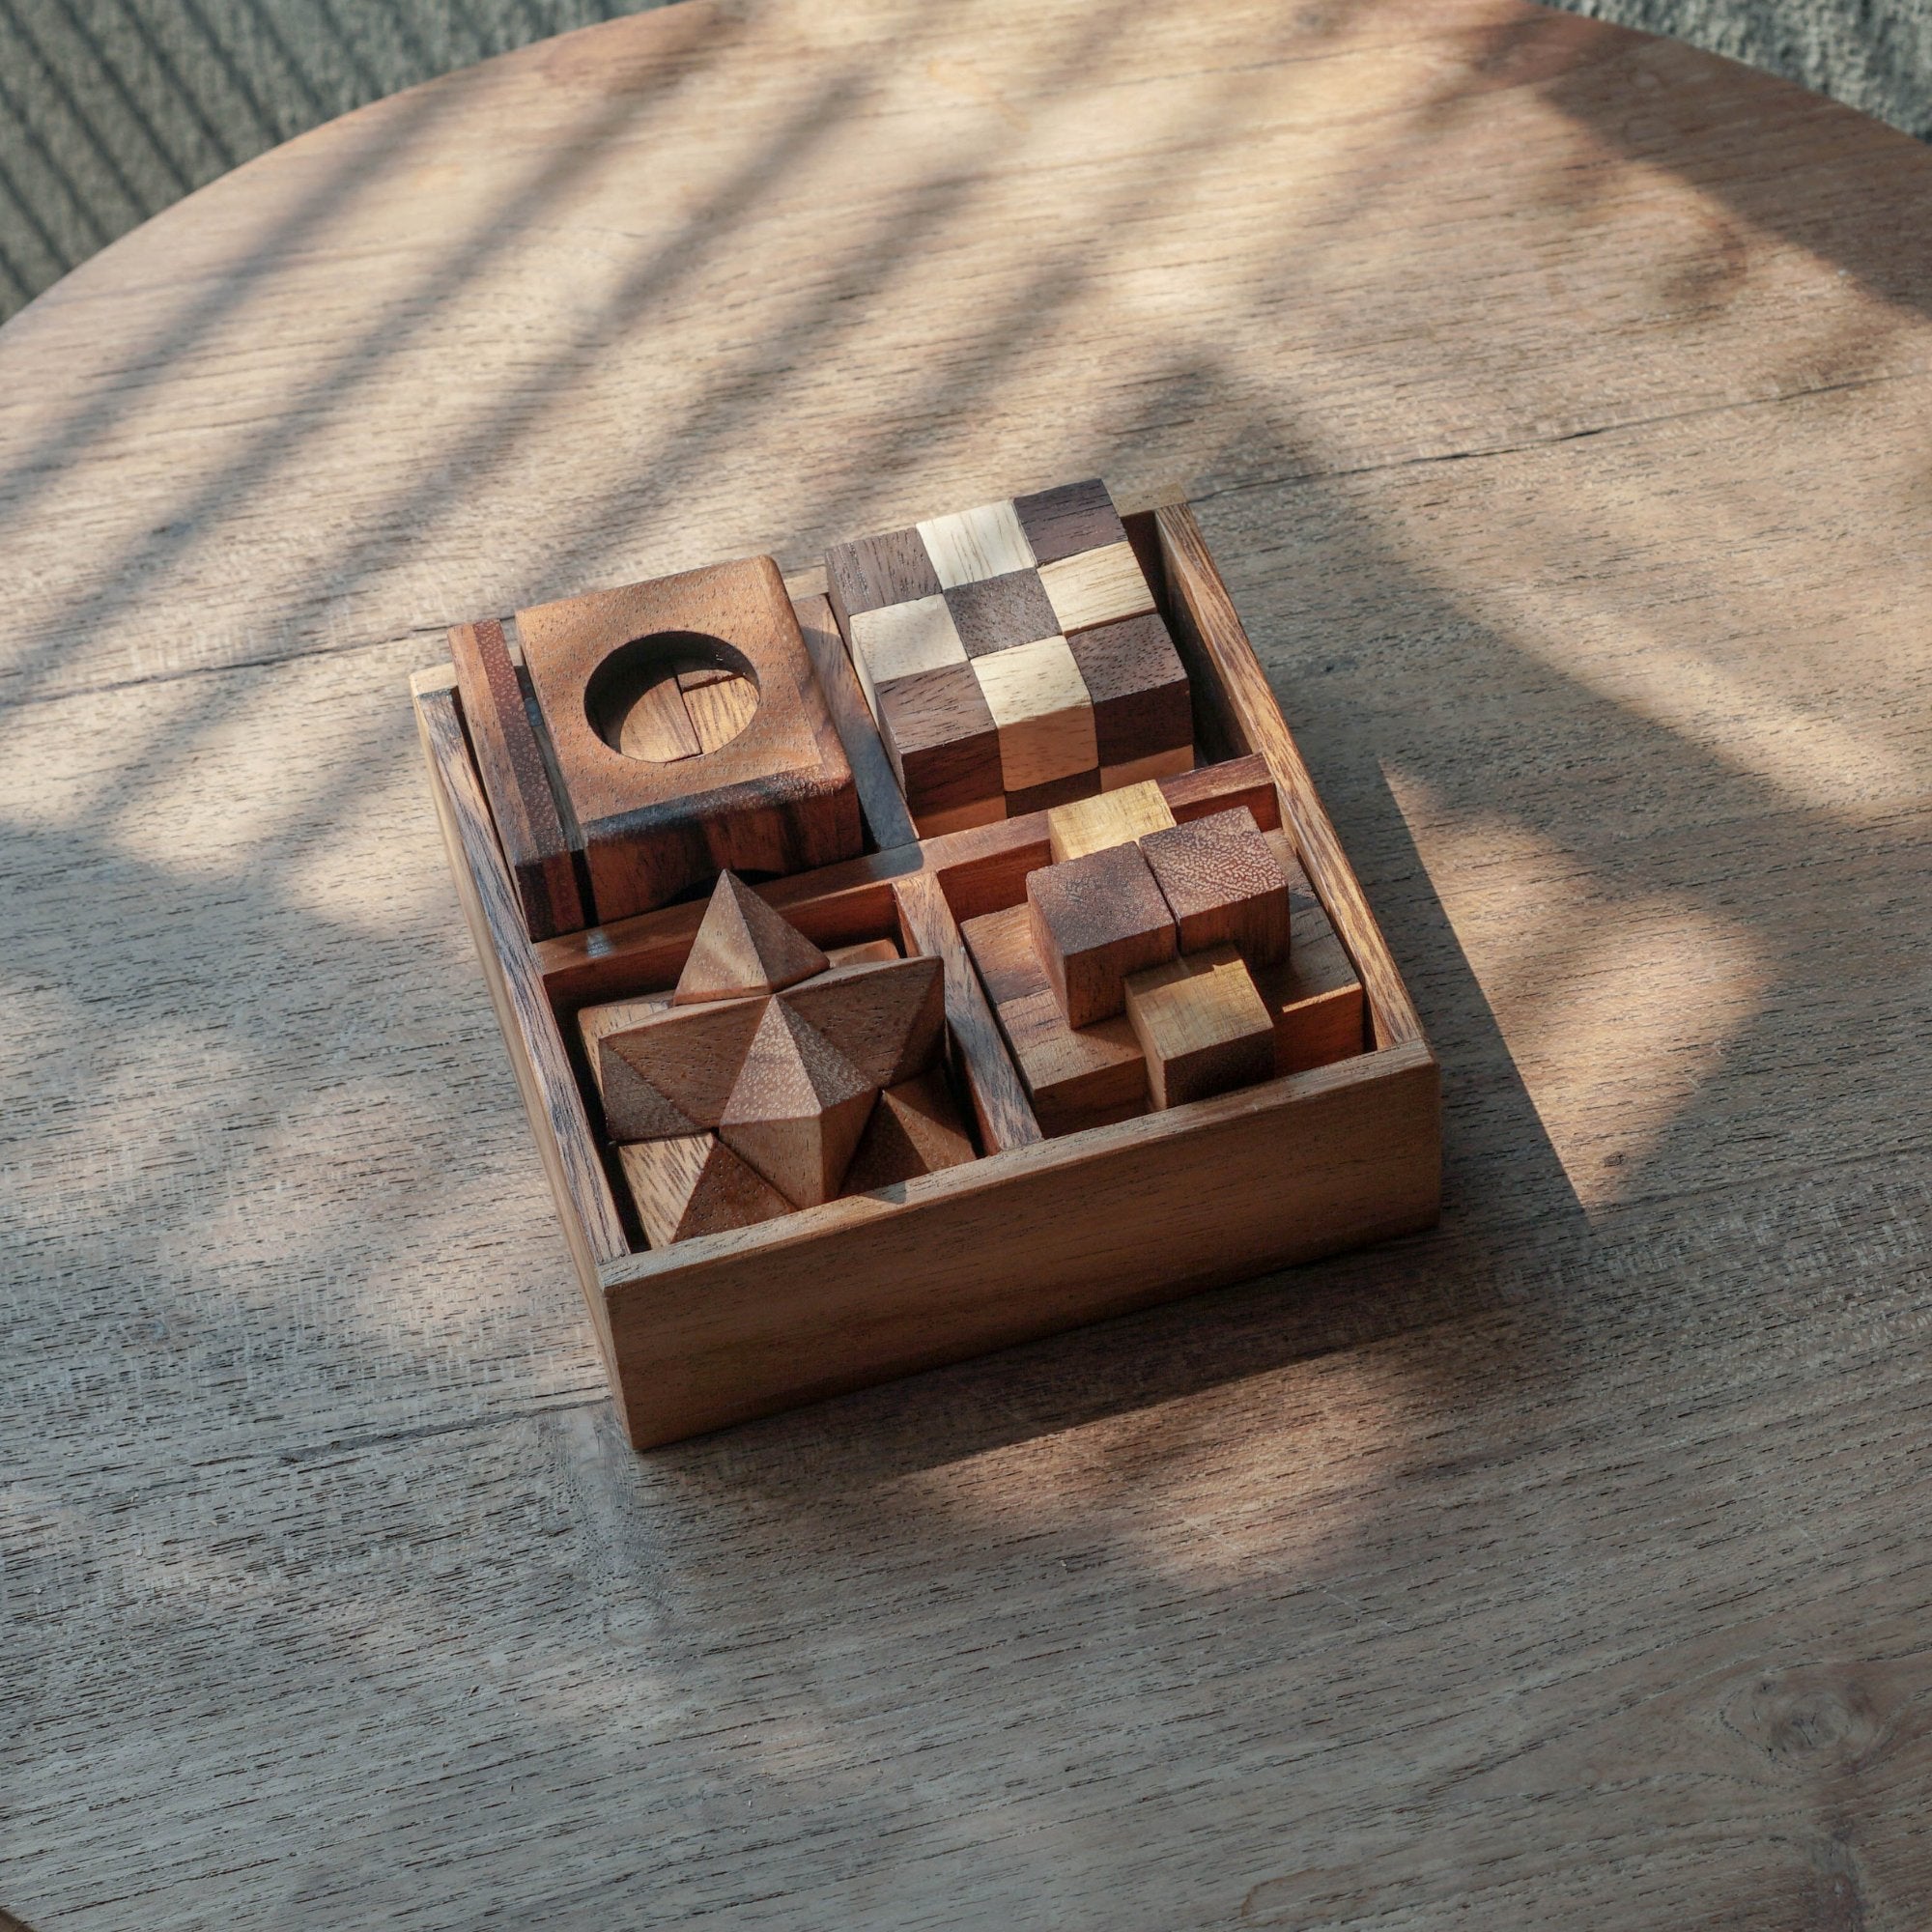 Secret Puzzle Box Brain Teaser Games Wooden Gift Hidden Diamond